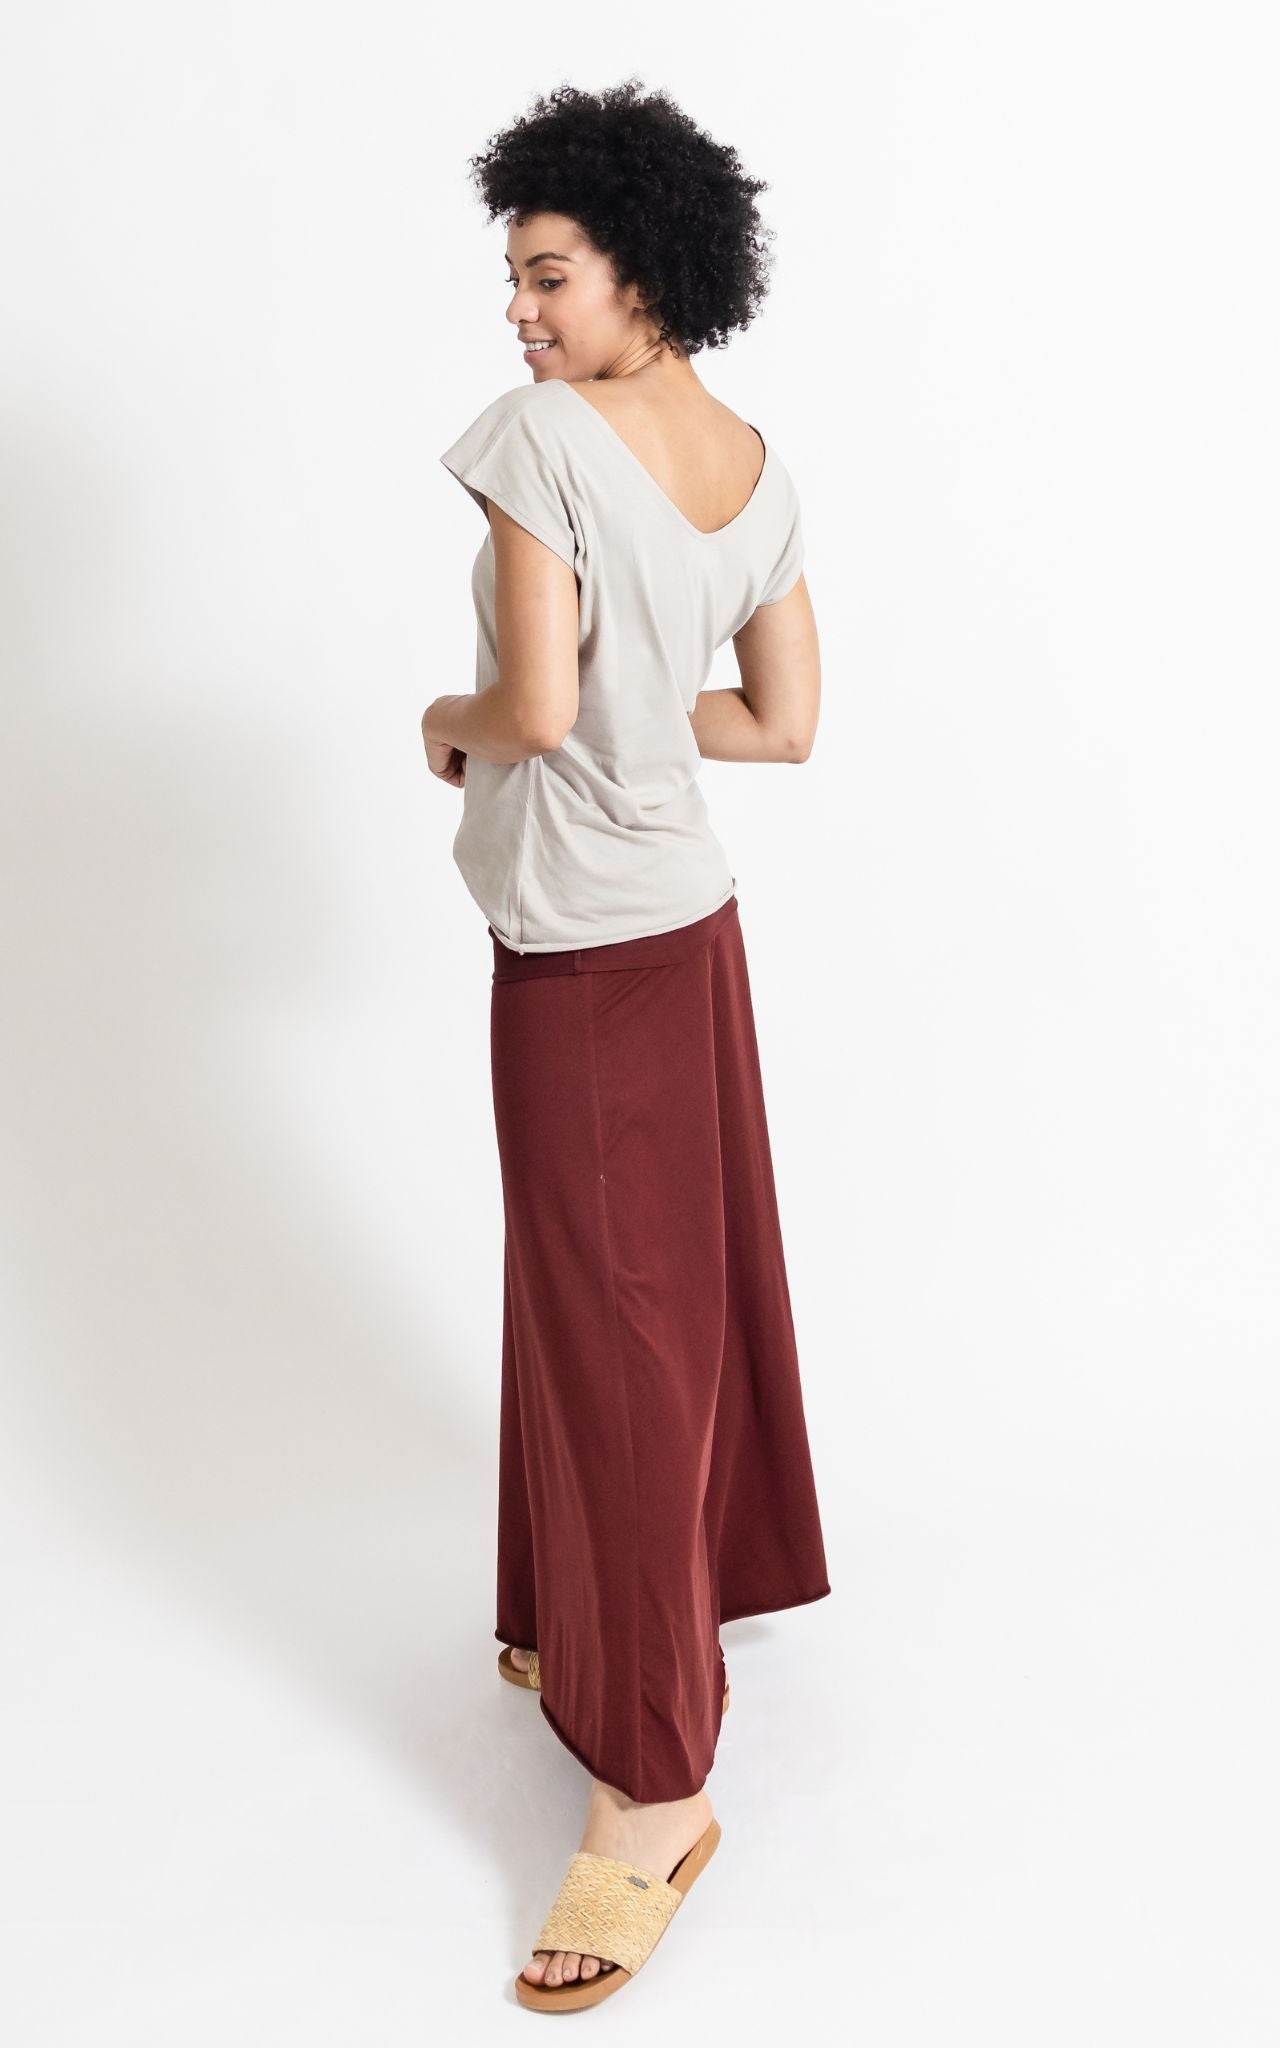 Surya Australia Ethical Organic Cotton Skirt made in Nepal - Berry